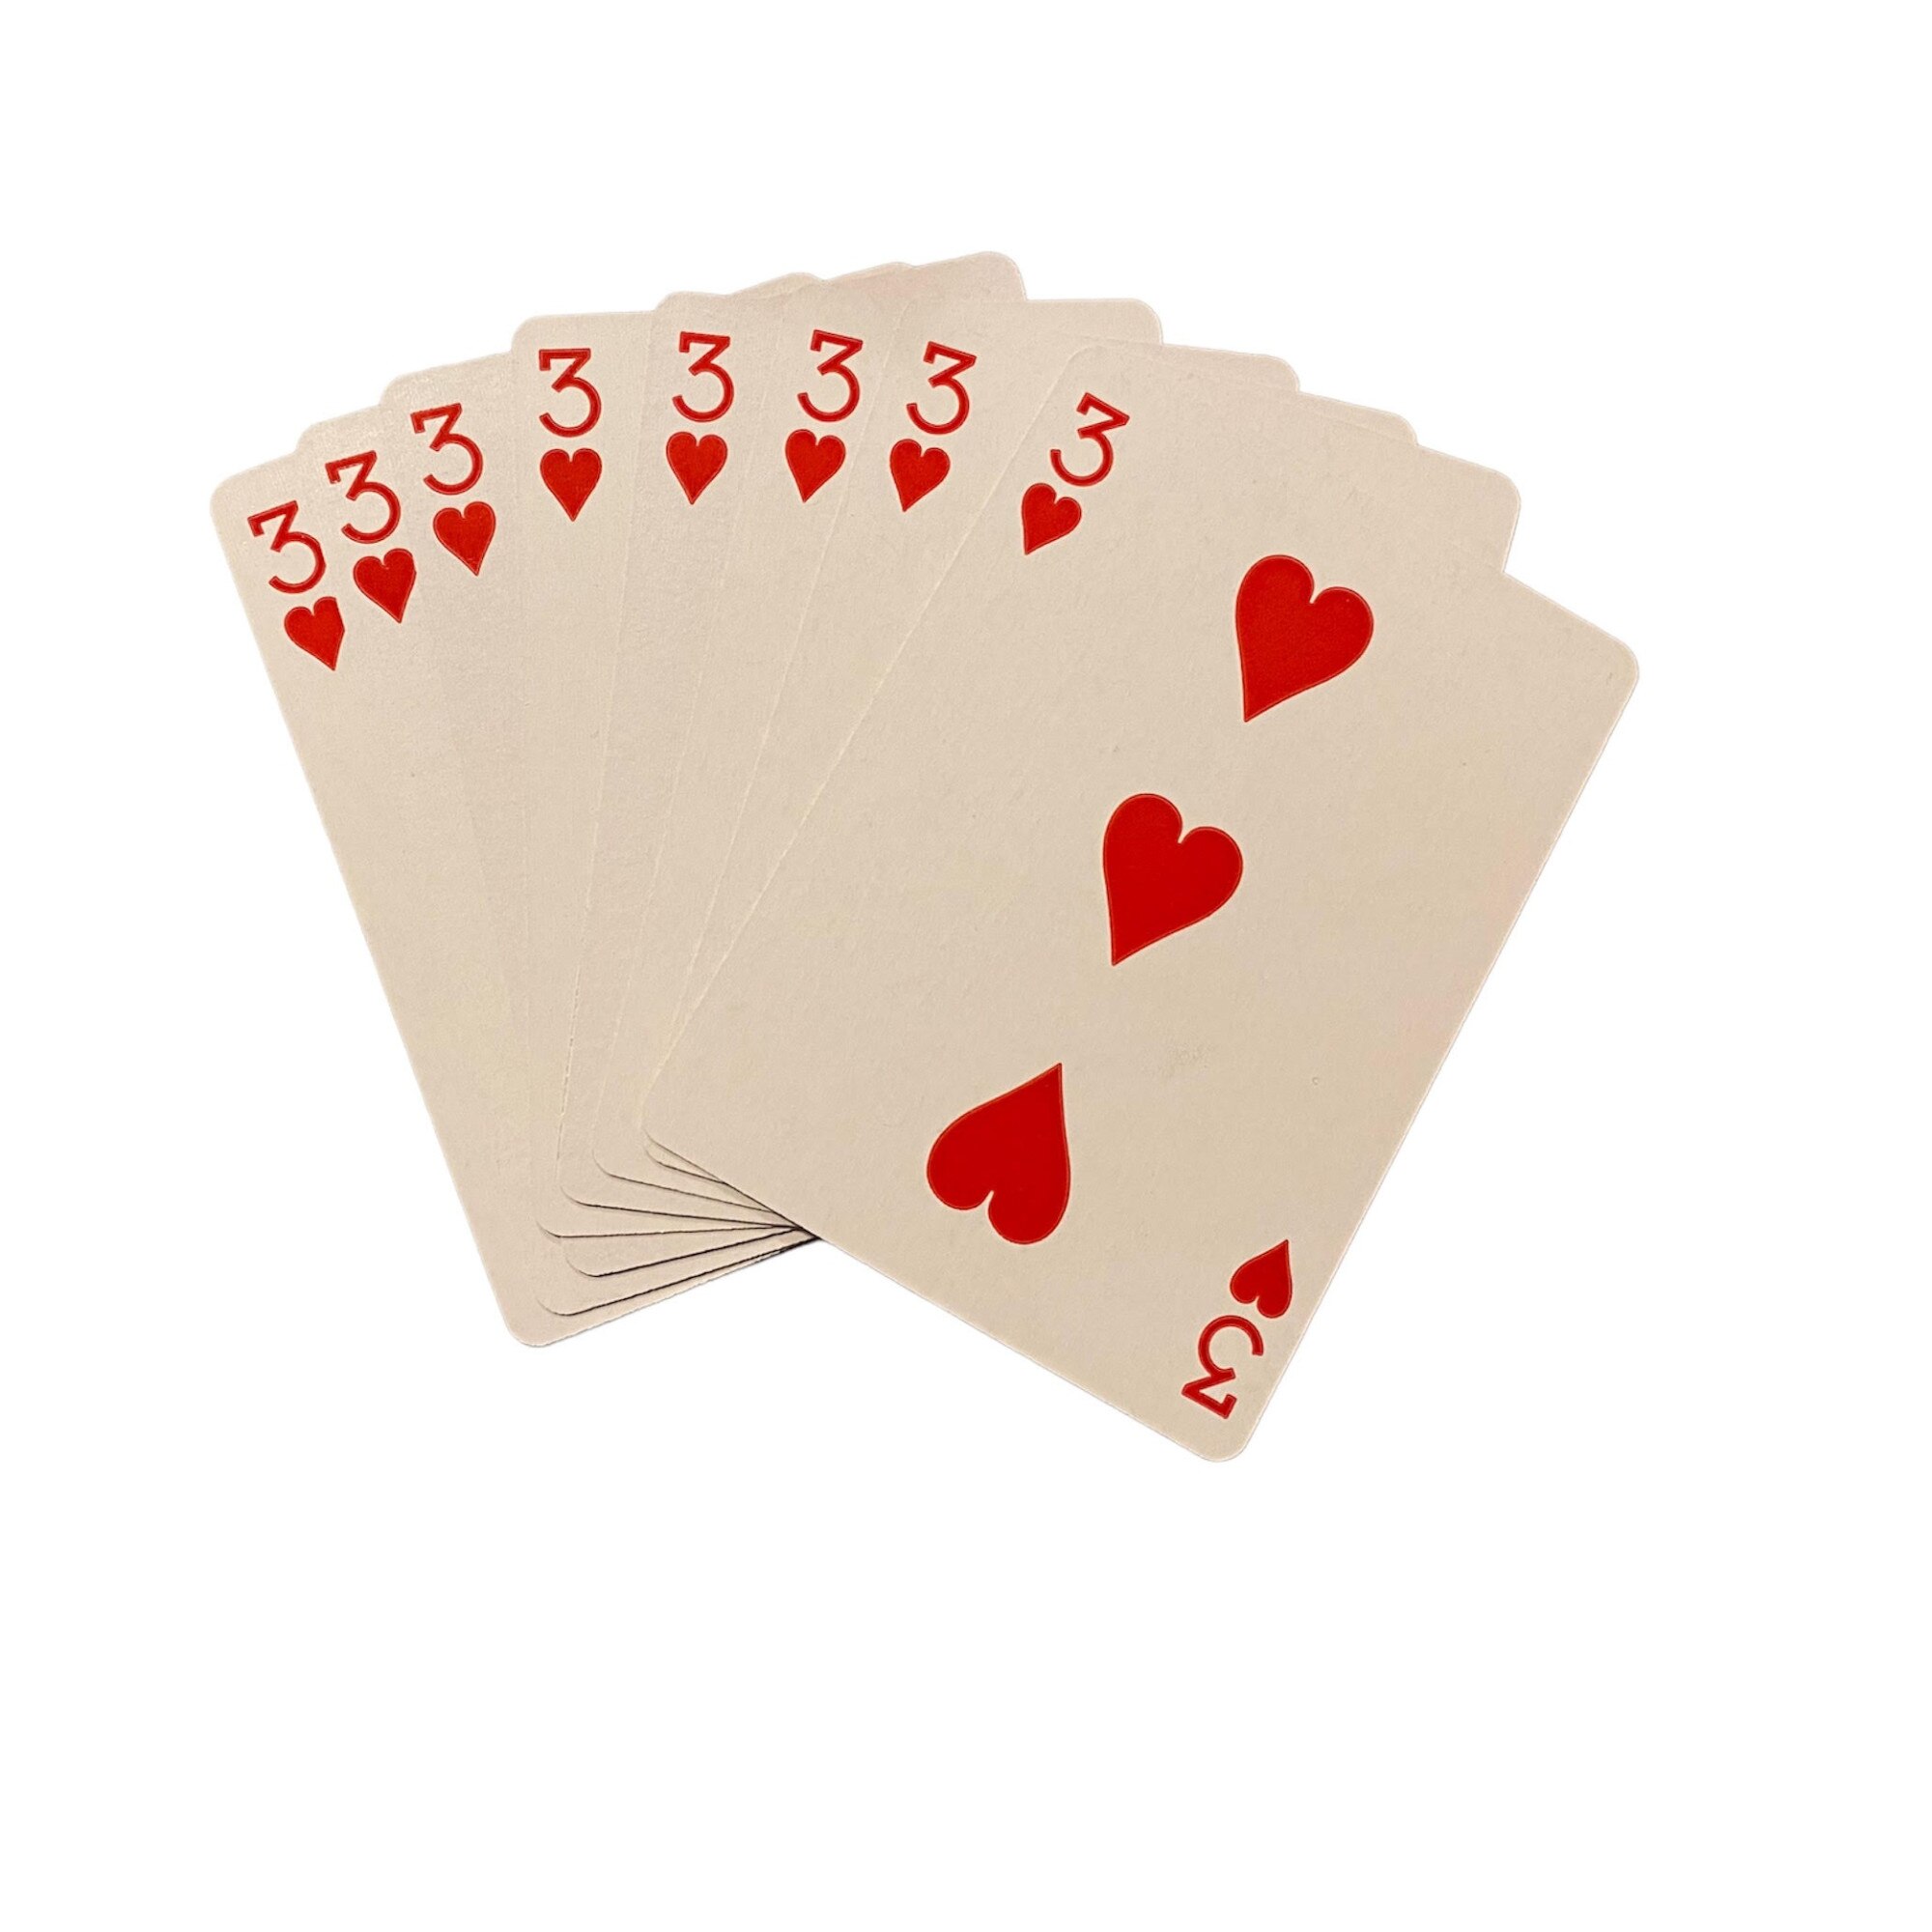 Pachet 52 carti de joc Gentelo, identice pentru trucuri de magie, 3 inima dimensiune standard 85 X 63mm - eMAG.ro